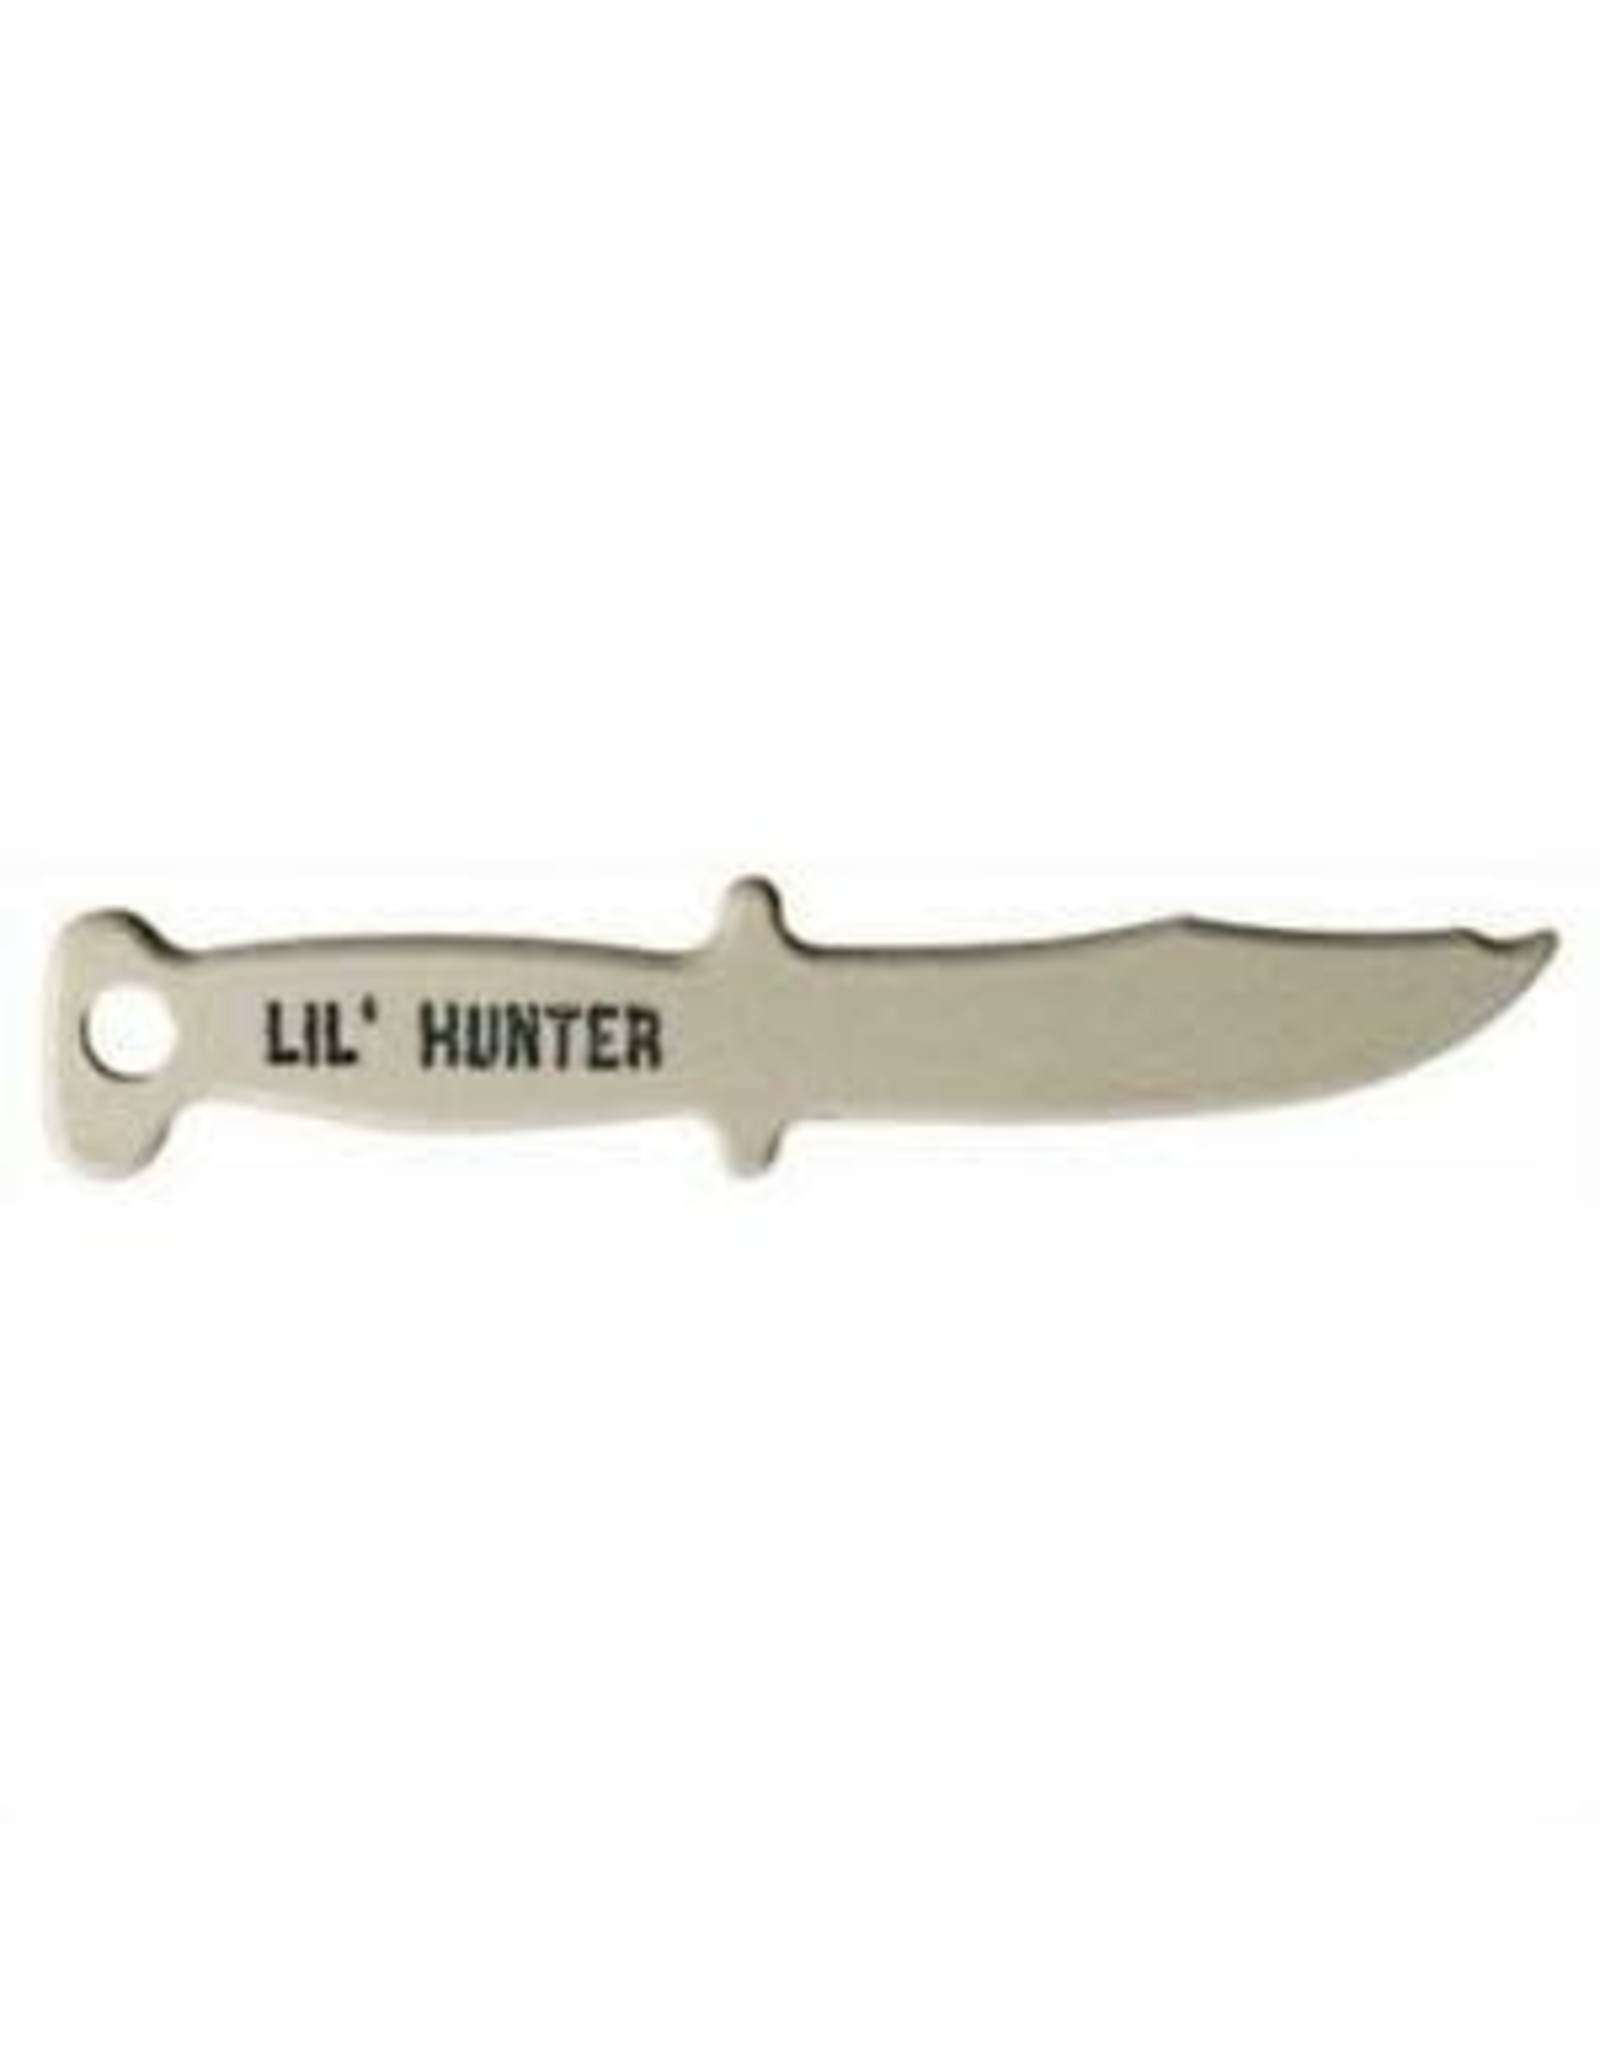 Lil' Hunter Knife